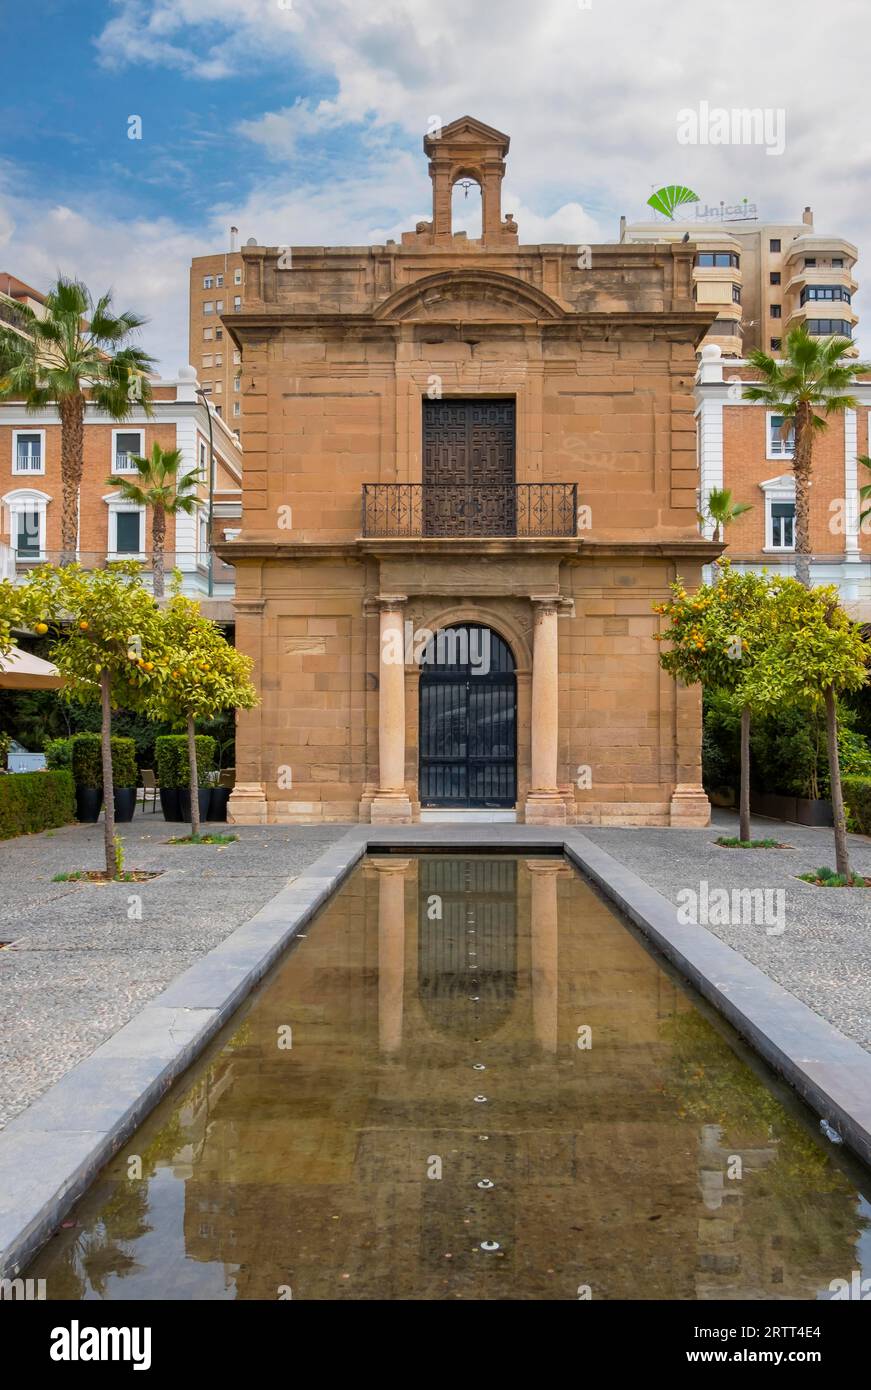 La Capilla del puerto de Malaga, historische Kapelle im Hafen von Malaga, Andalusien, Spanien Stockfoto